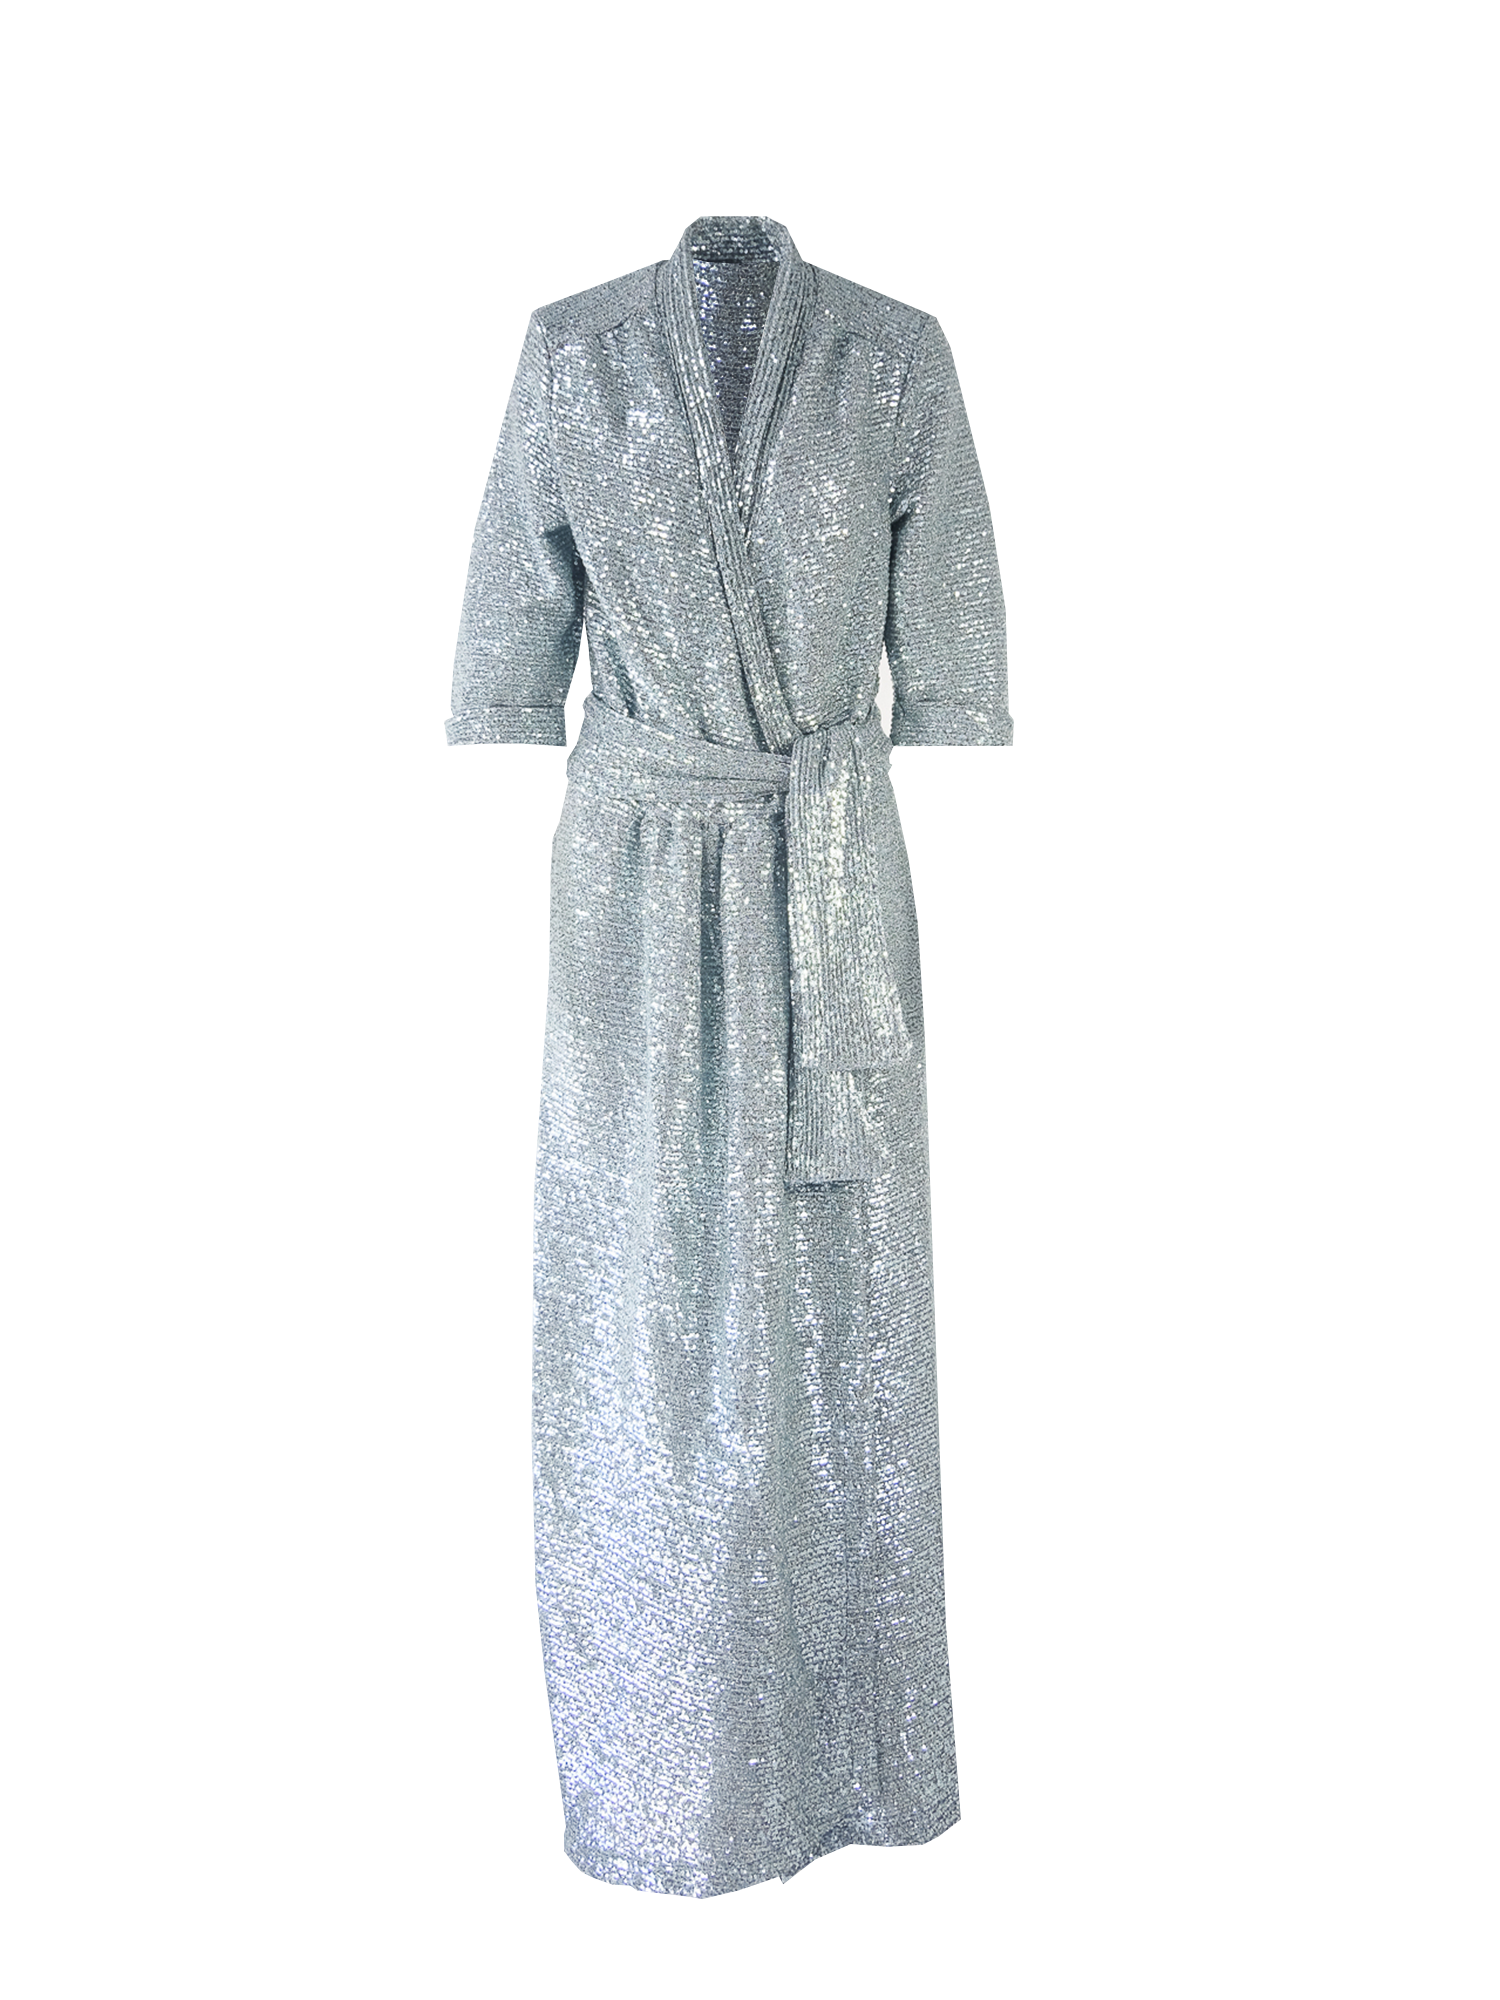 GINEVRA - long dress in light blue sequin